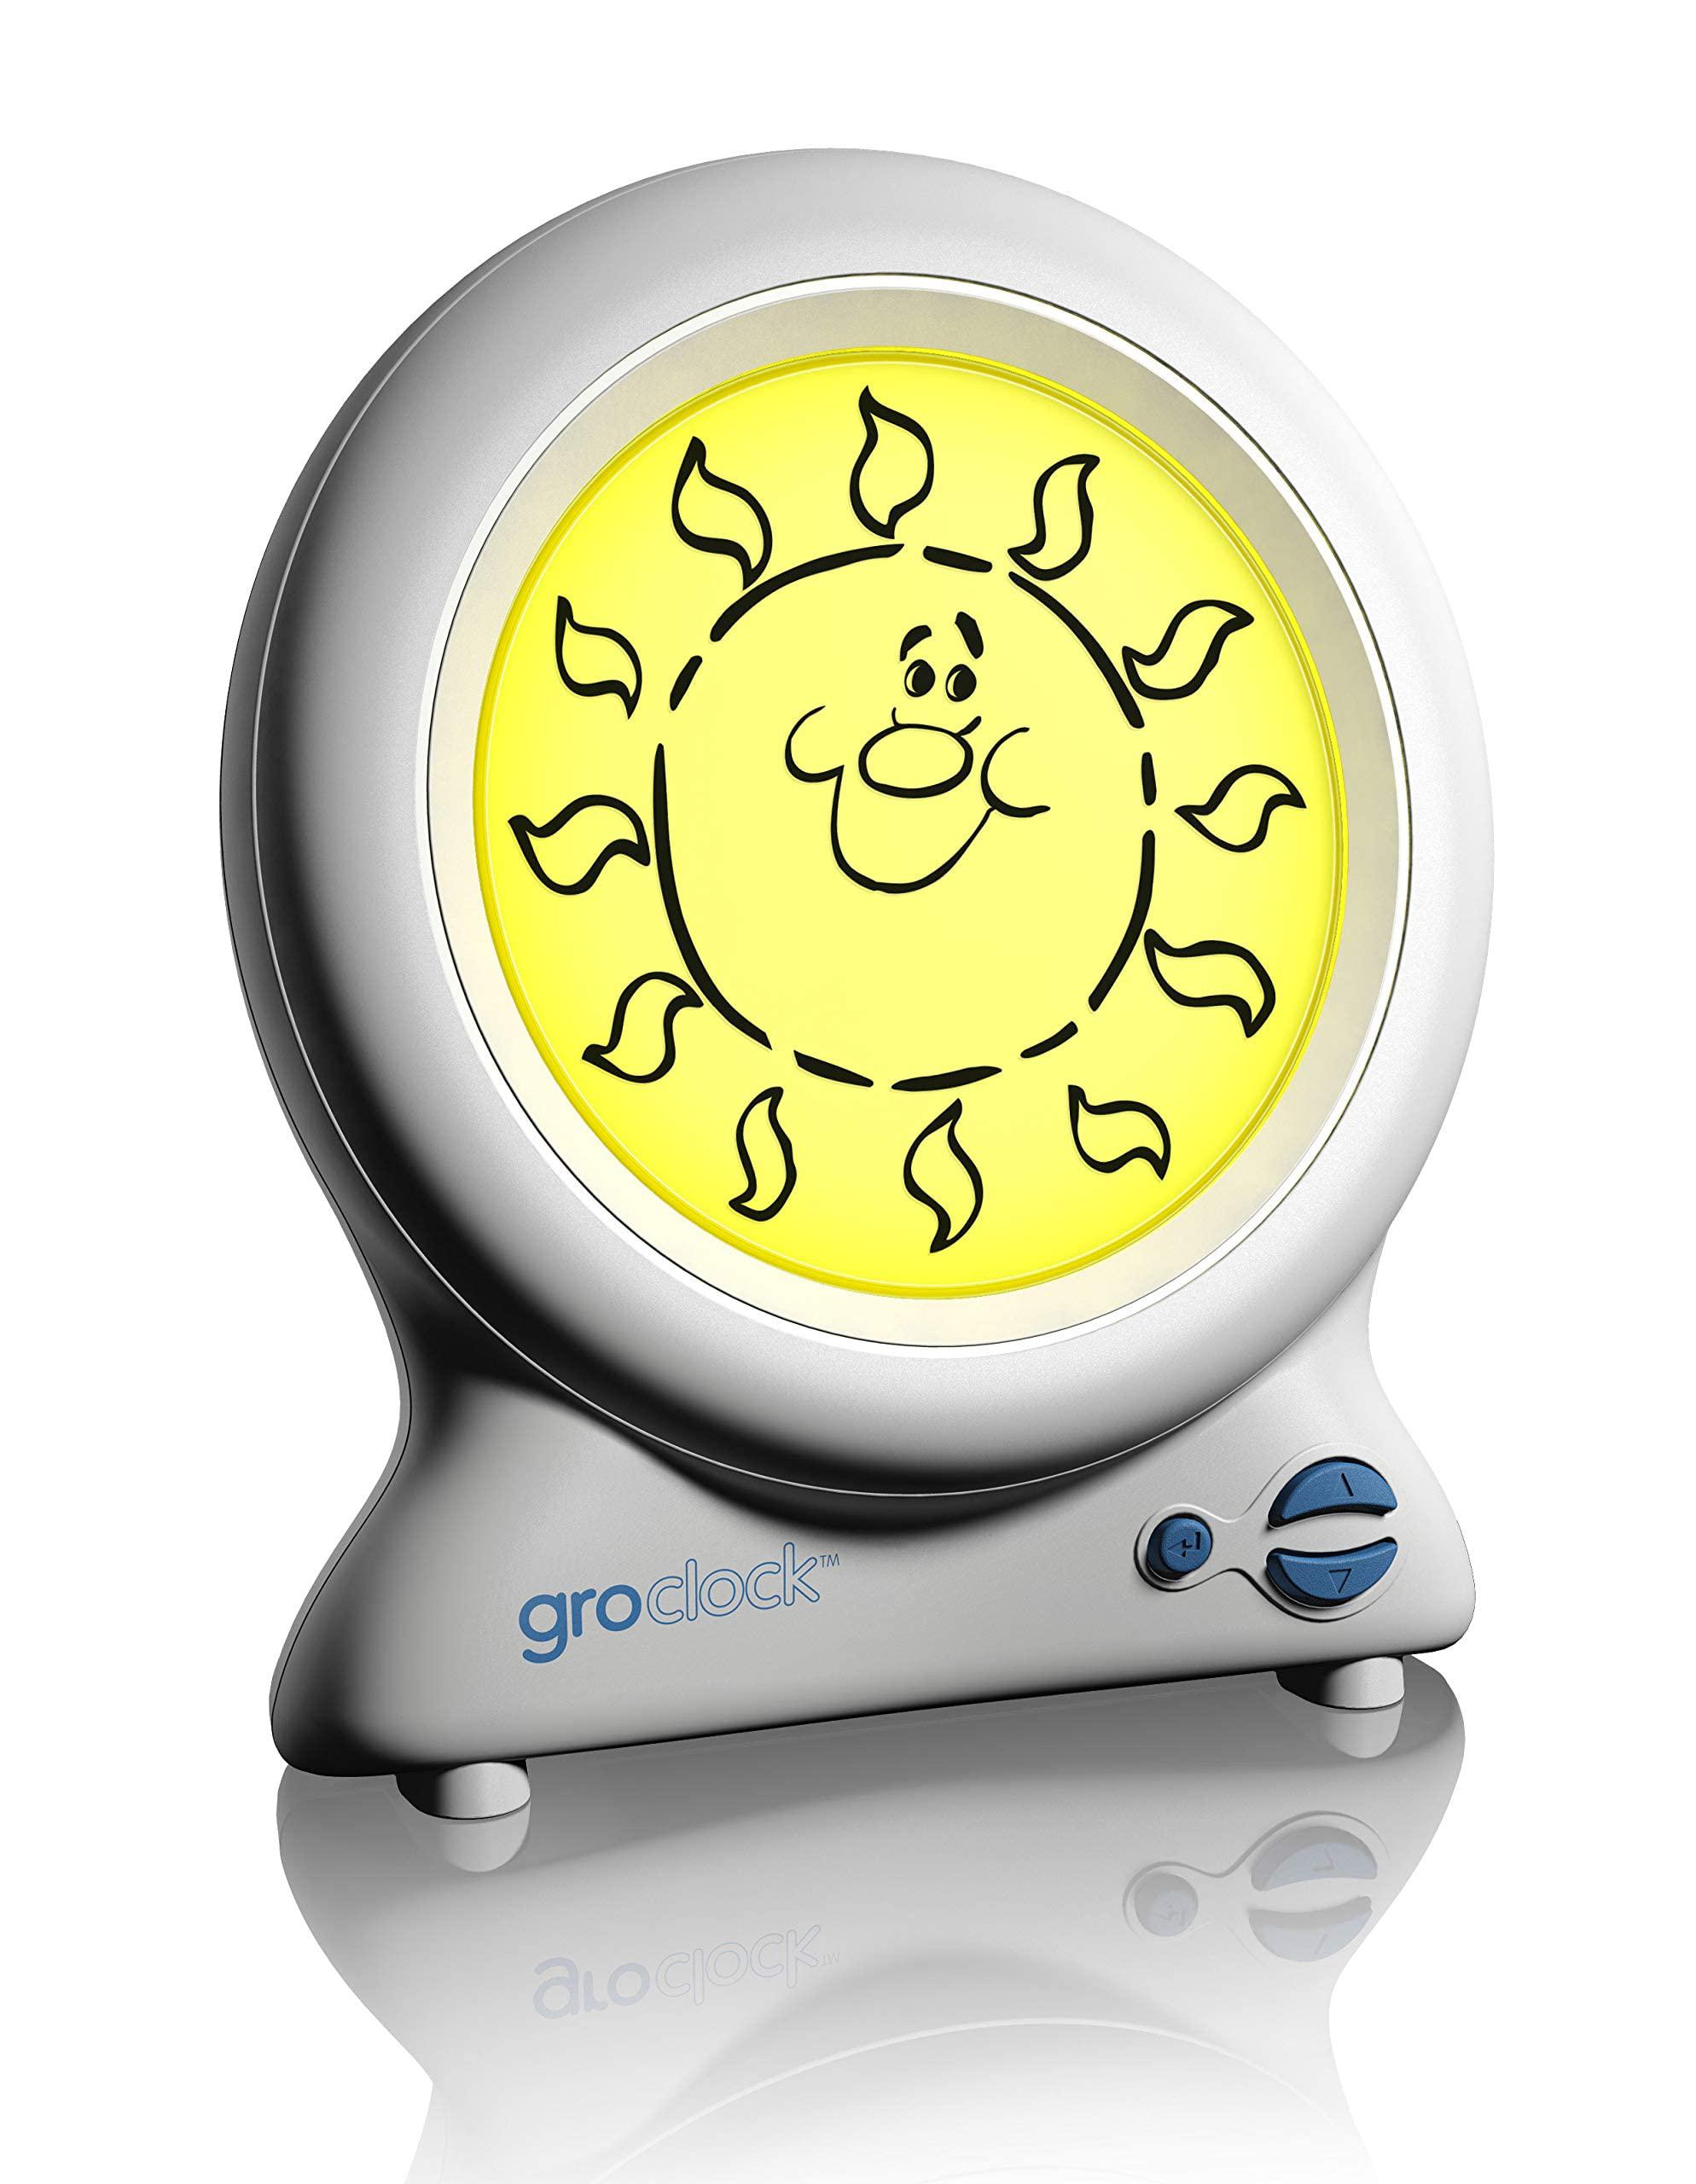 Tommee Tippee the gro company gro-clock sleep trainer